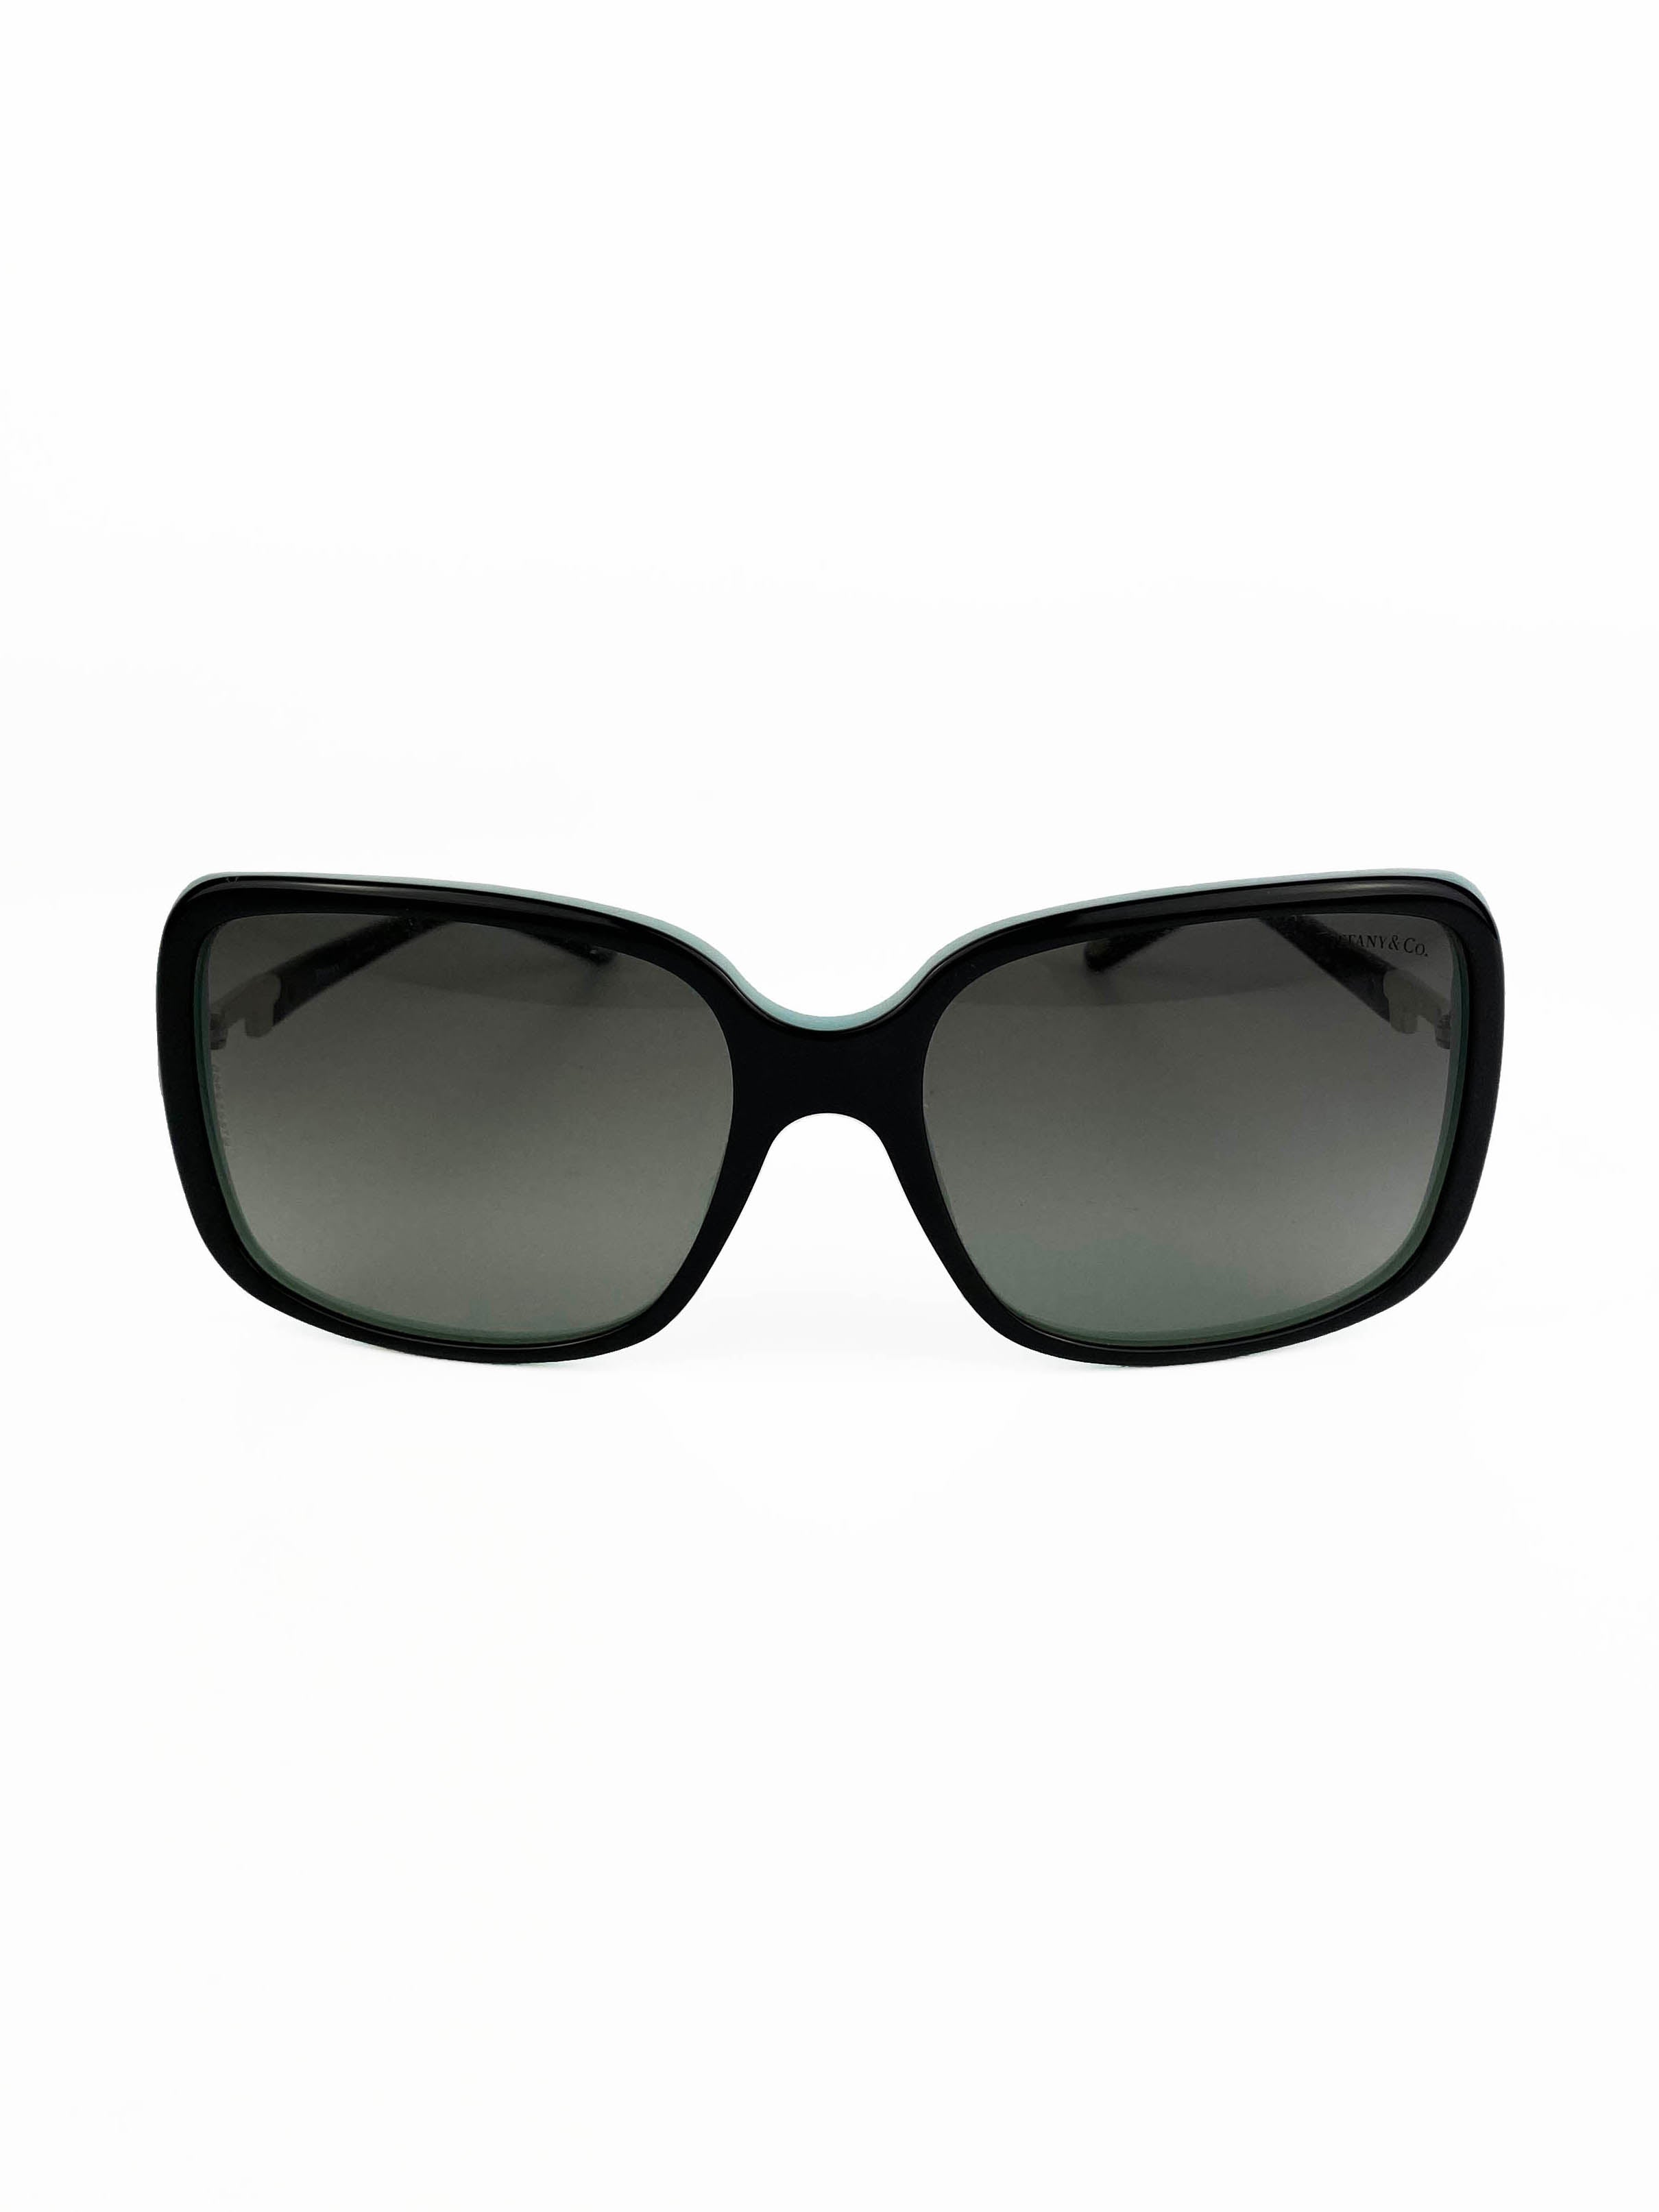 tiffany-sunglasses-1.jpg